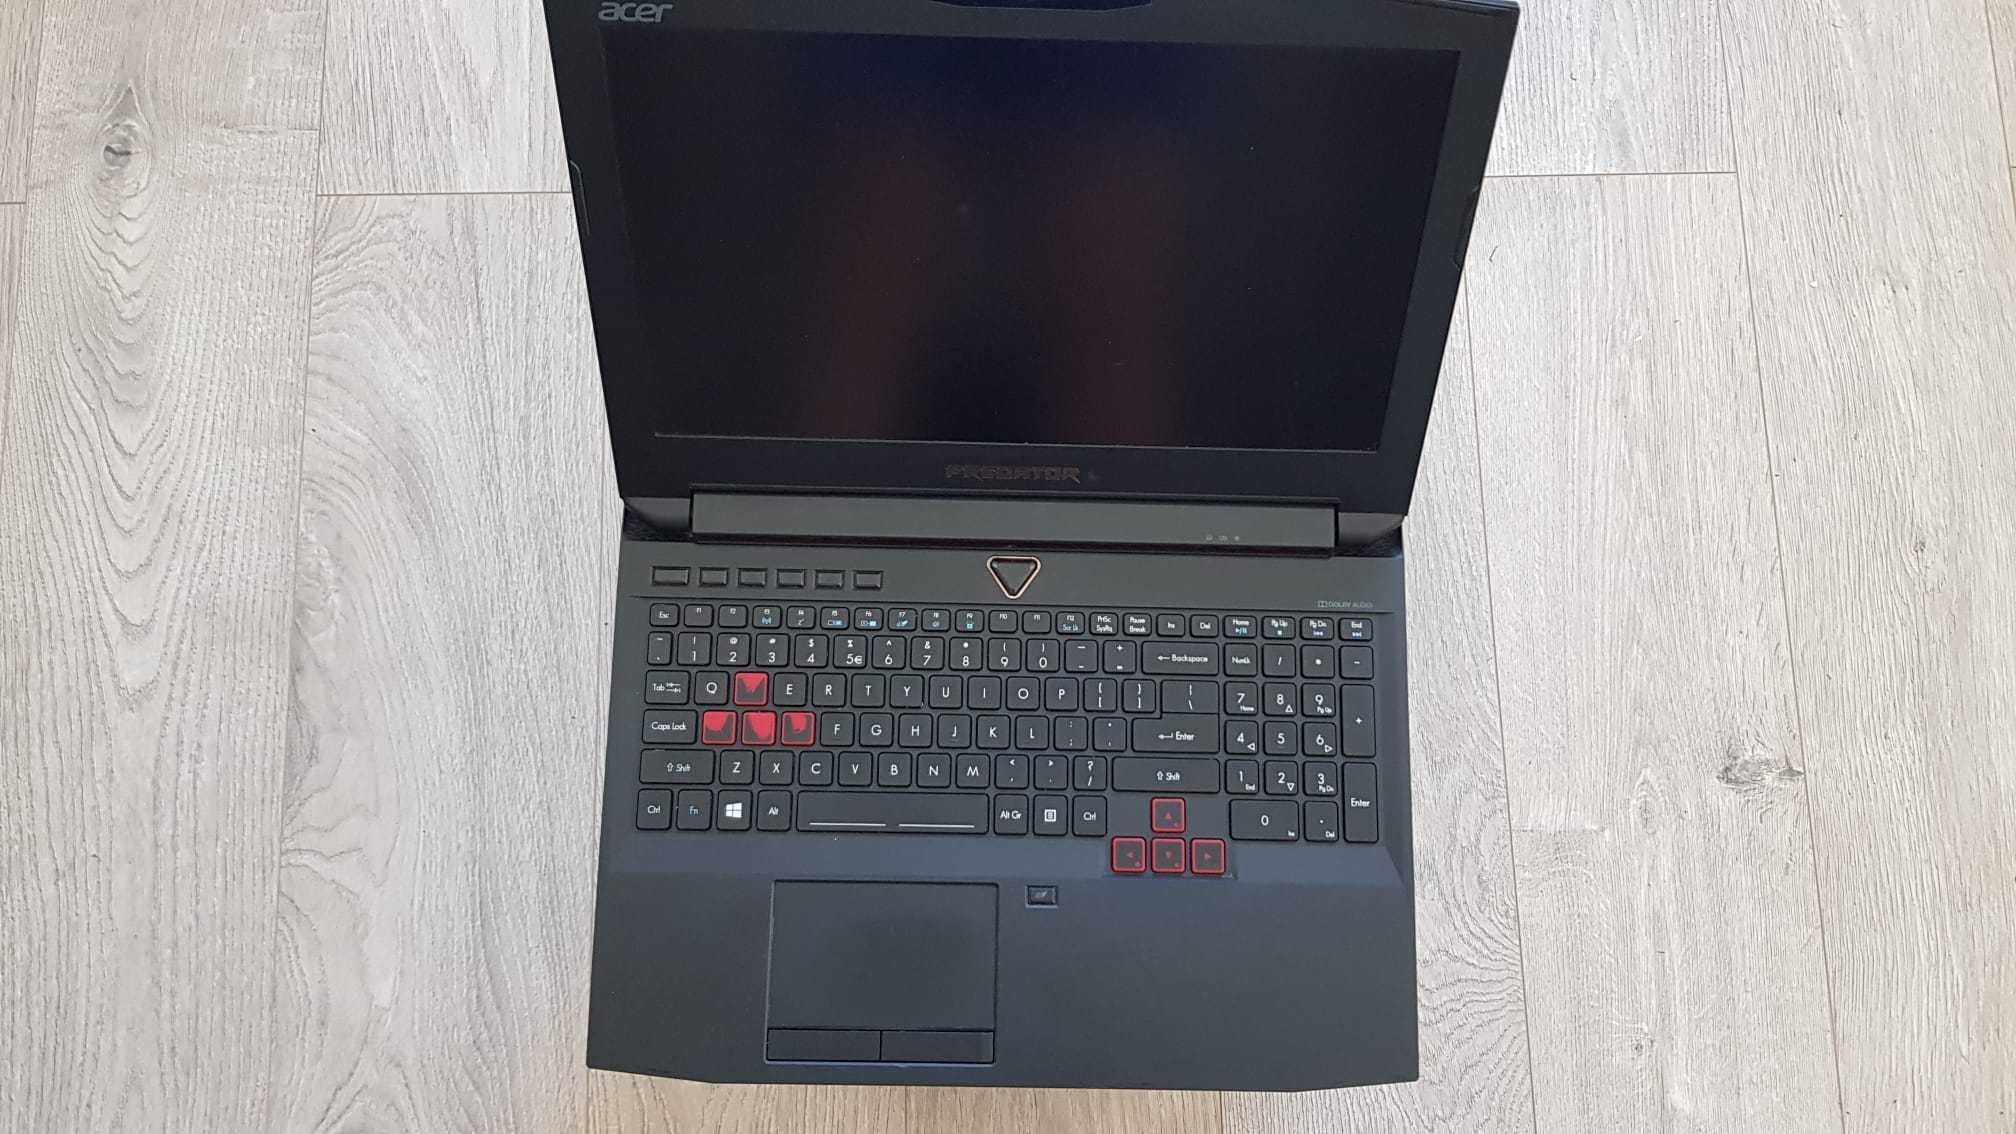 Laptop Acer Predator 15 -I7-6700HQ, GTX 970M 6GB, 24GB RAM, SSD 960GB